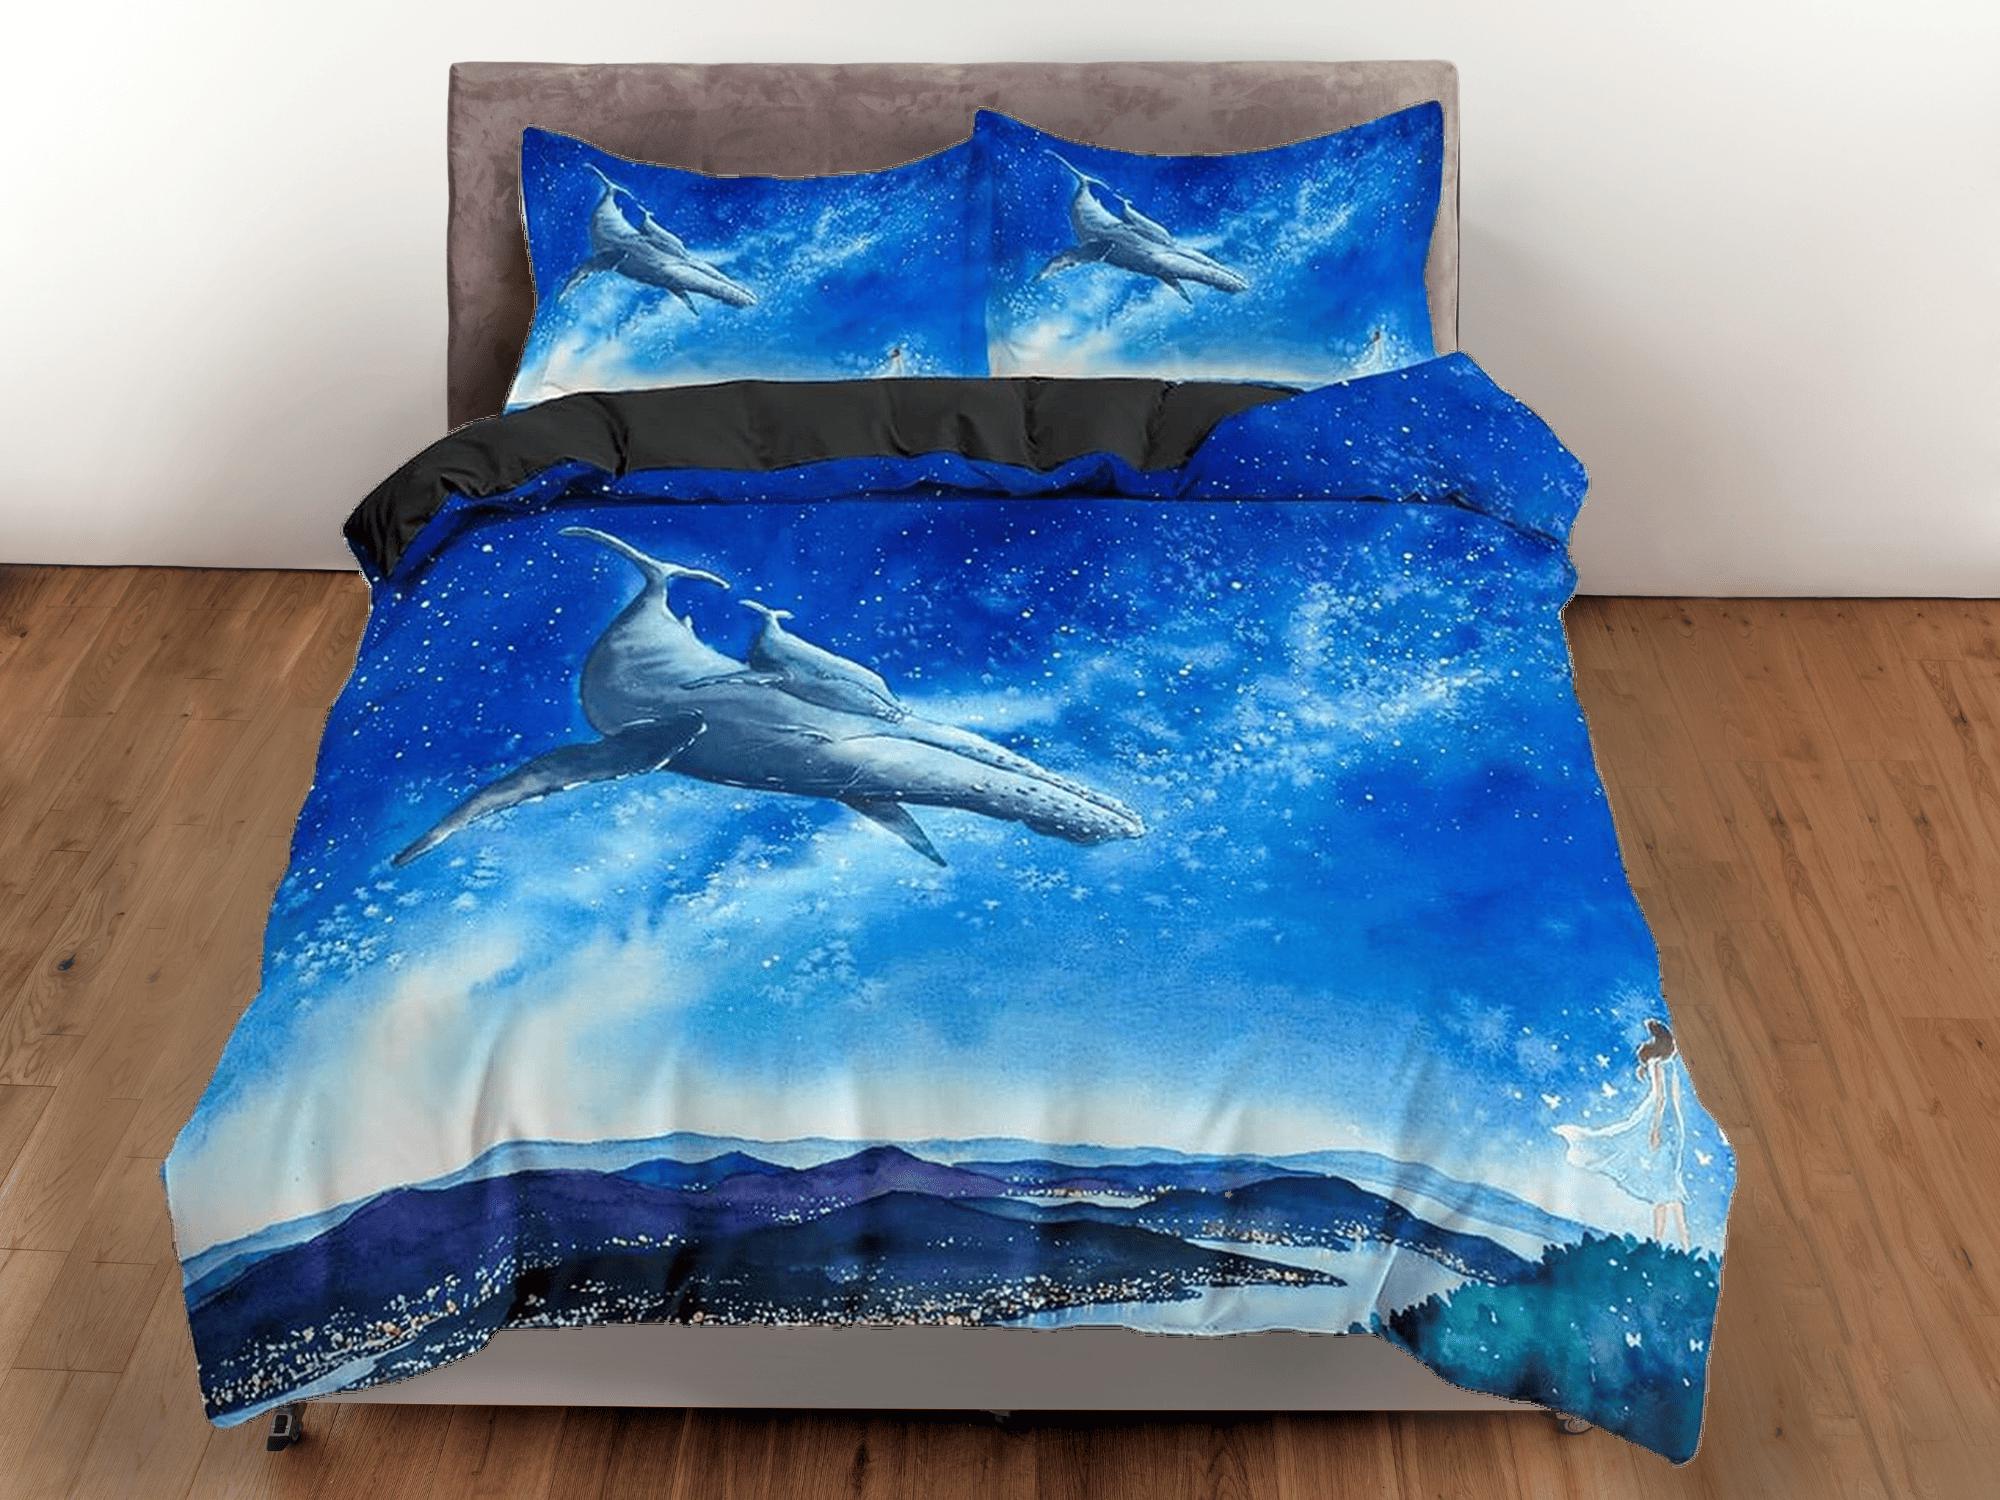 daintyduvet Flying whale bedding sky blue duvet cover, galaxy bedding set full king queen twin, college dorm bedding, celestial bedding gift